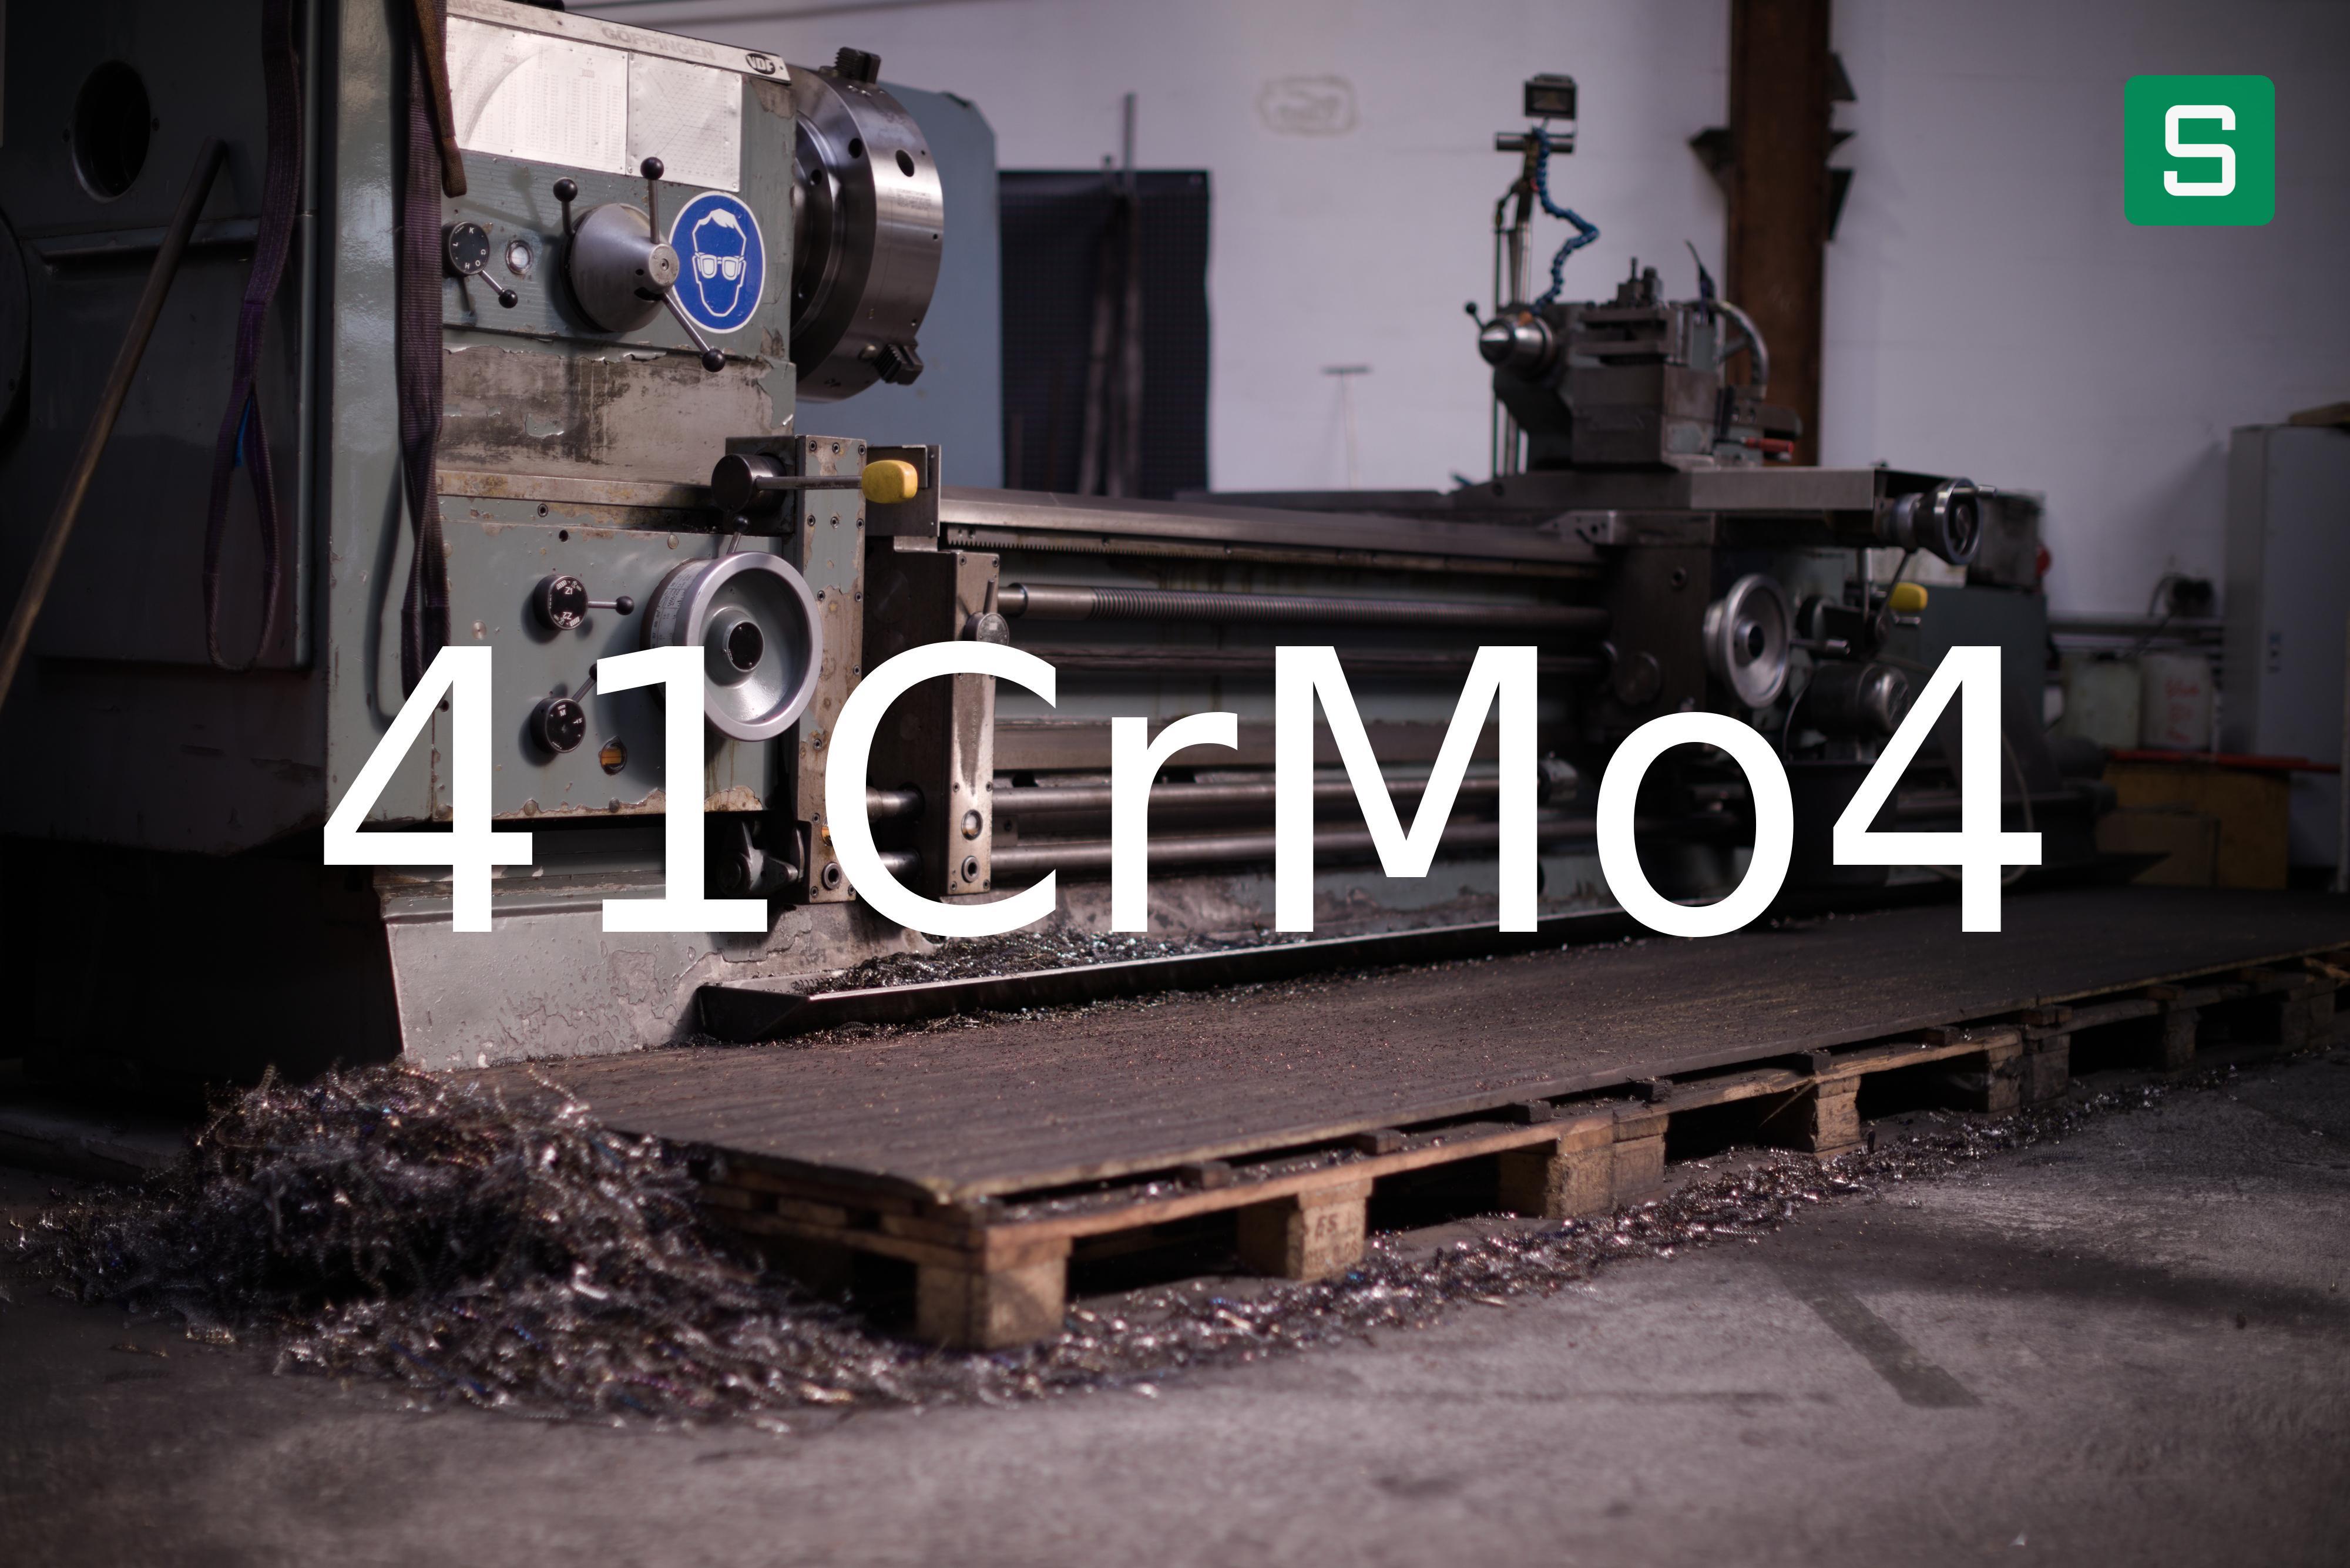 Steel Material: 41CrMo4